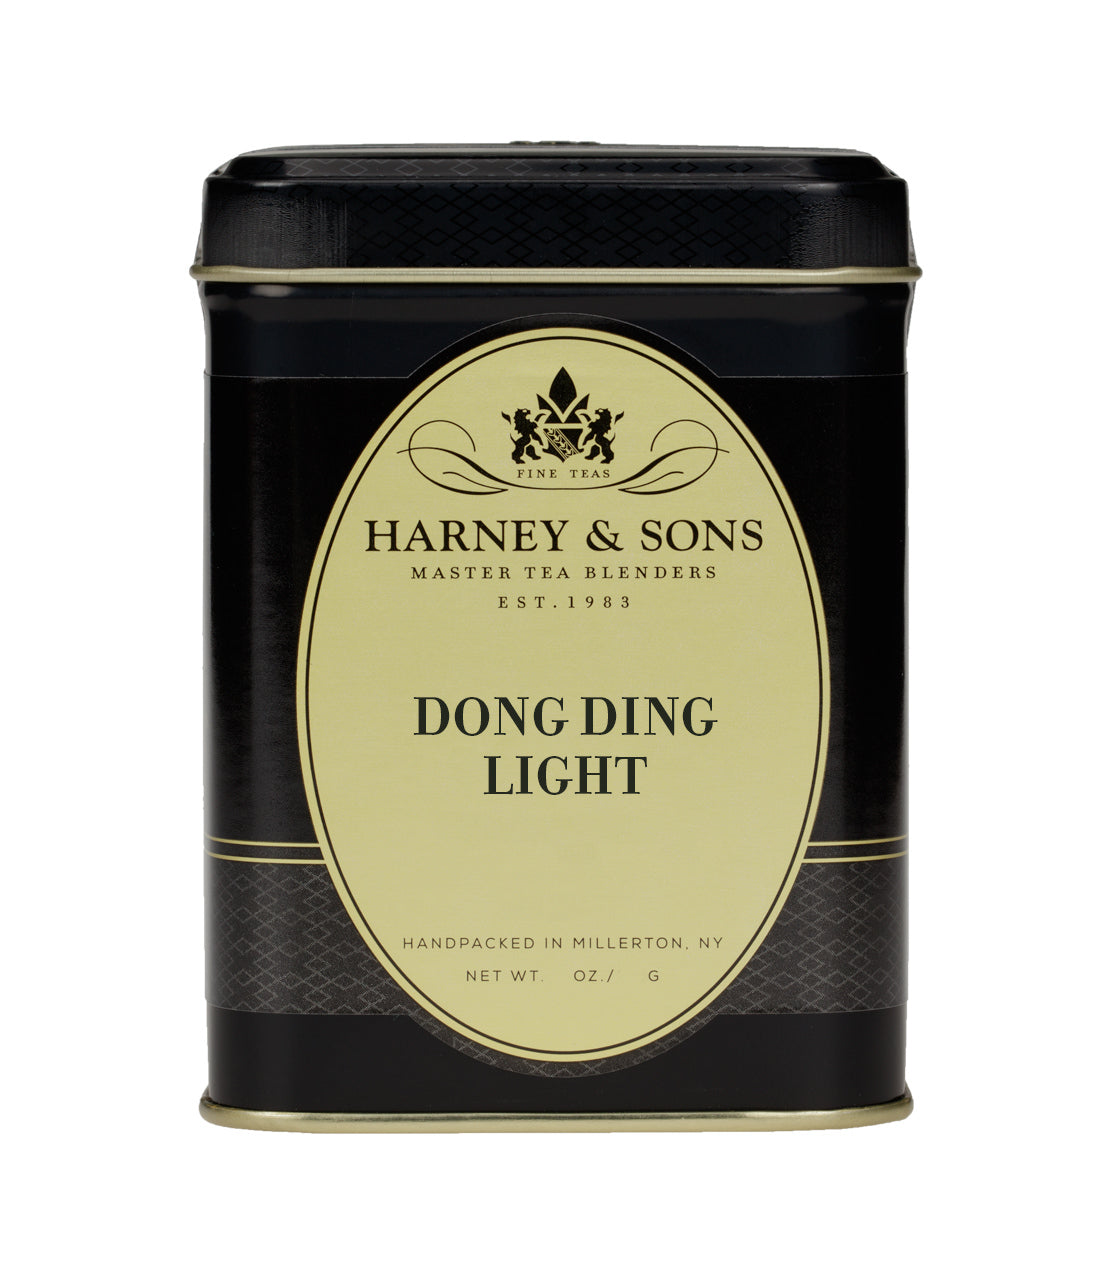 Dong Ding Light - Loose 2 oz. Tin - Harney & Sons Fine Teas